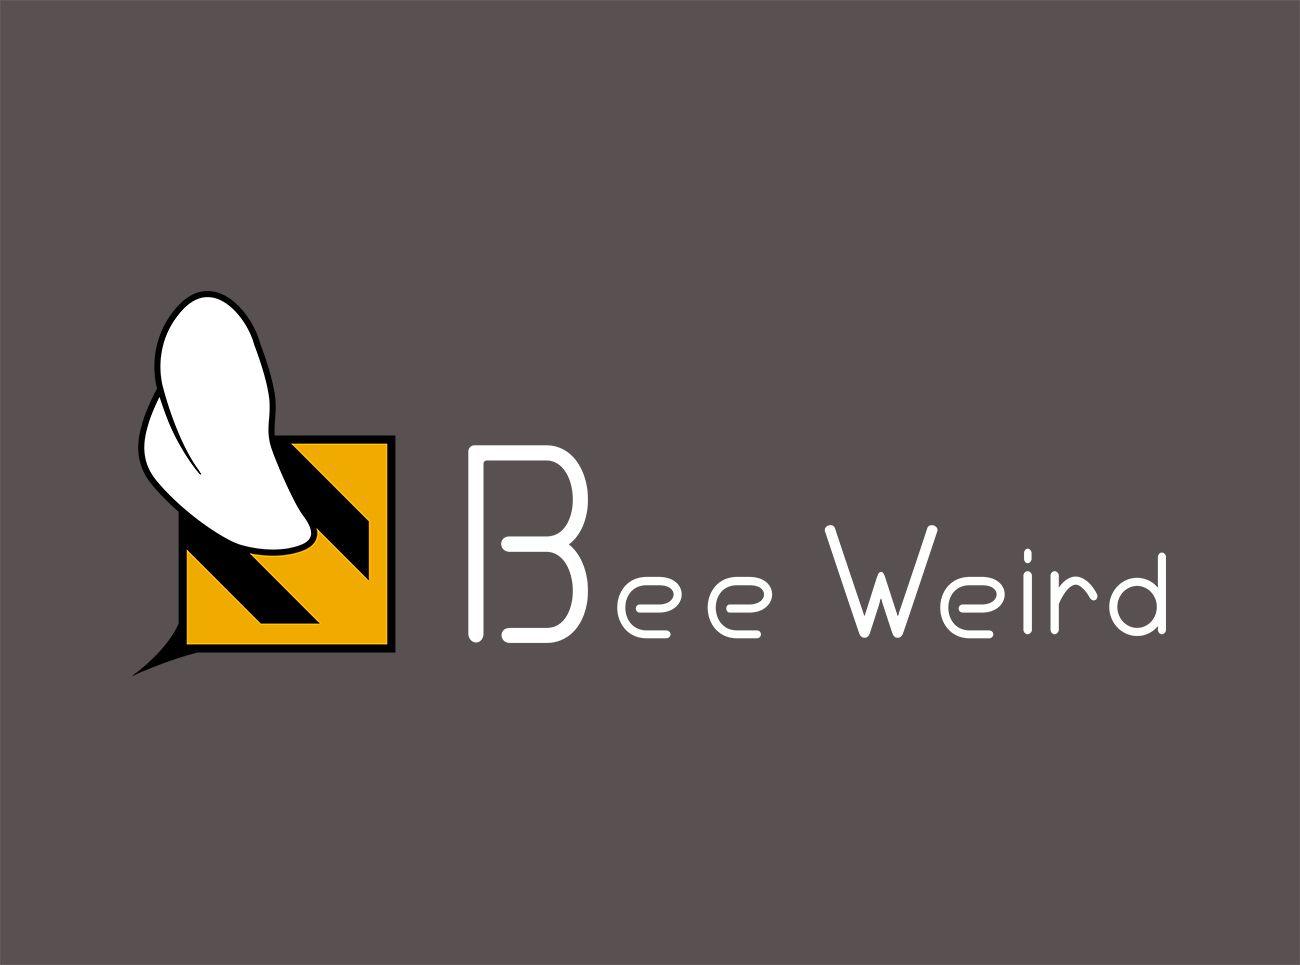 Weird Company Logo - Bold, Serious Logo Design for Bee Wierd Enterprises by Devi 2 ...